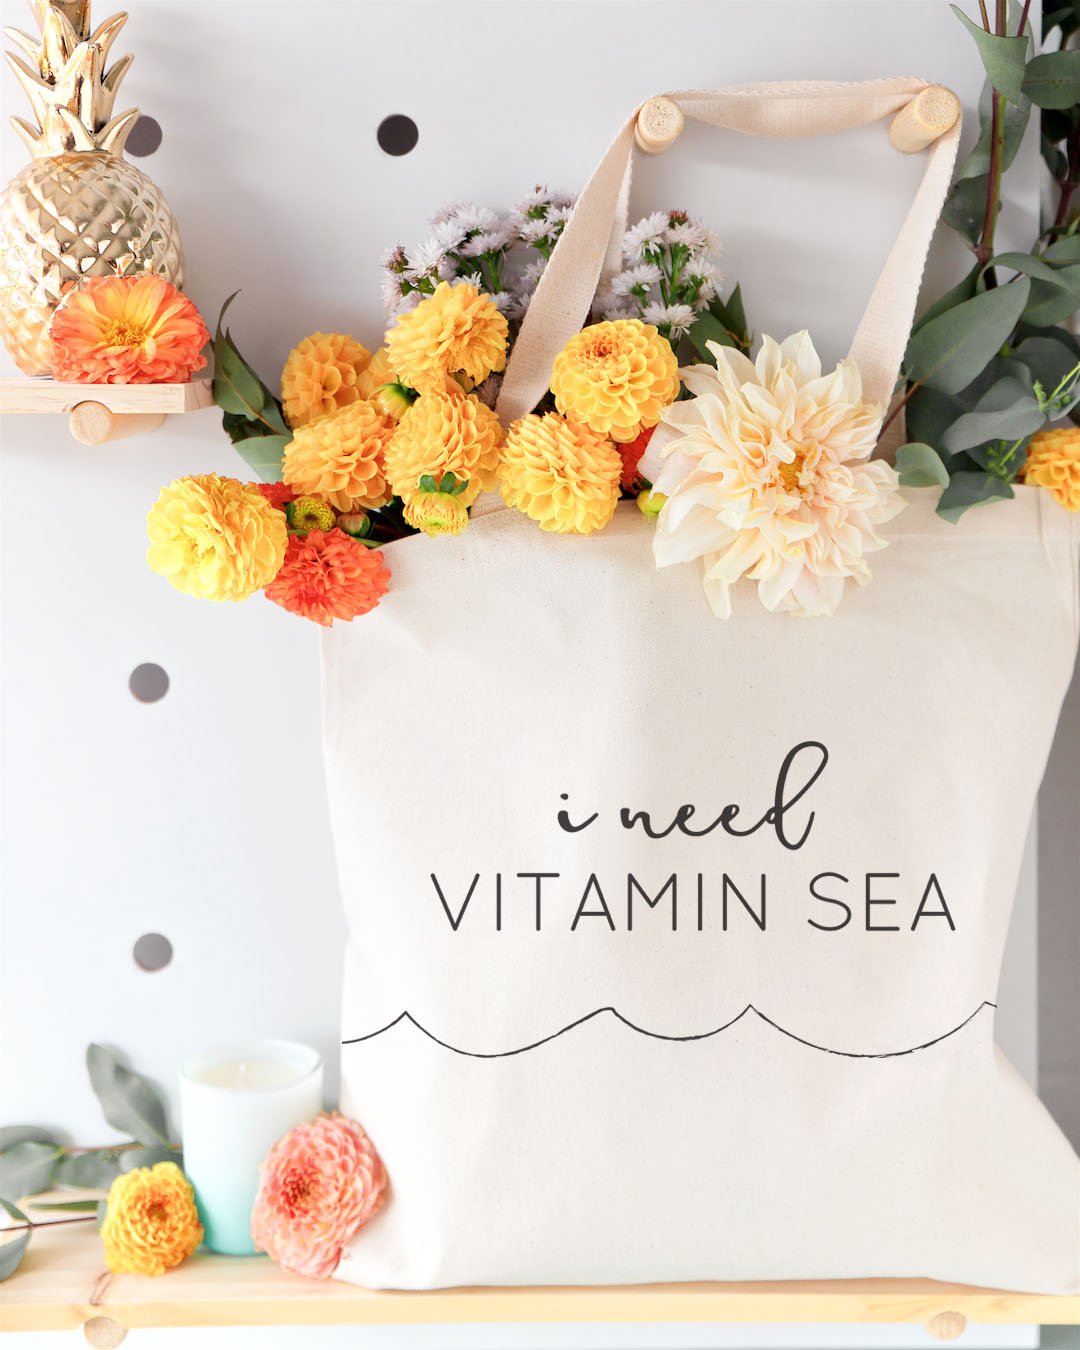 I Need Vitamin Sea Cotton Canvas Tote Bag - Mercantile Mountain